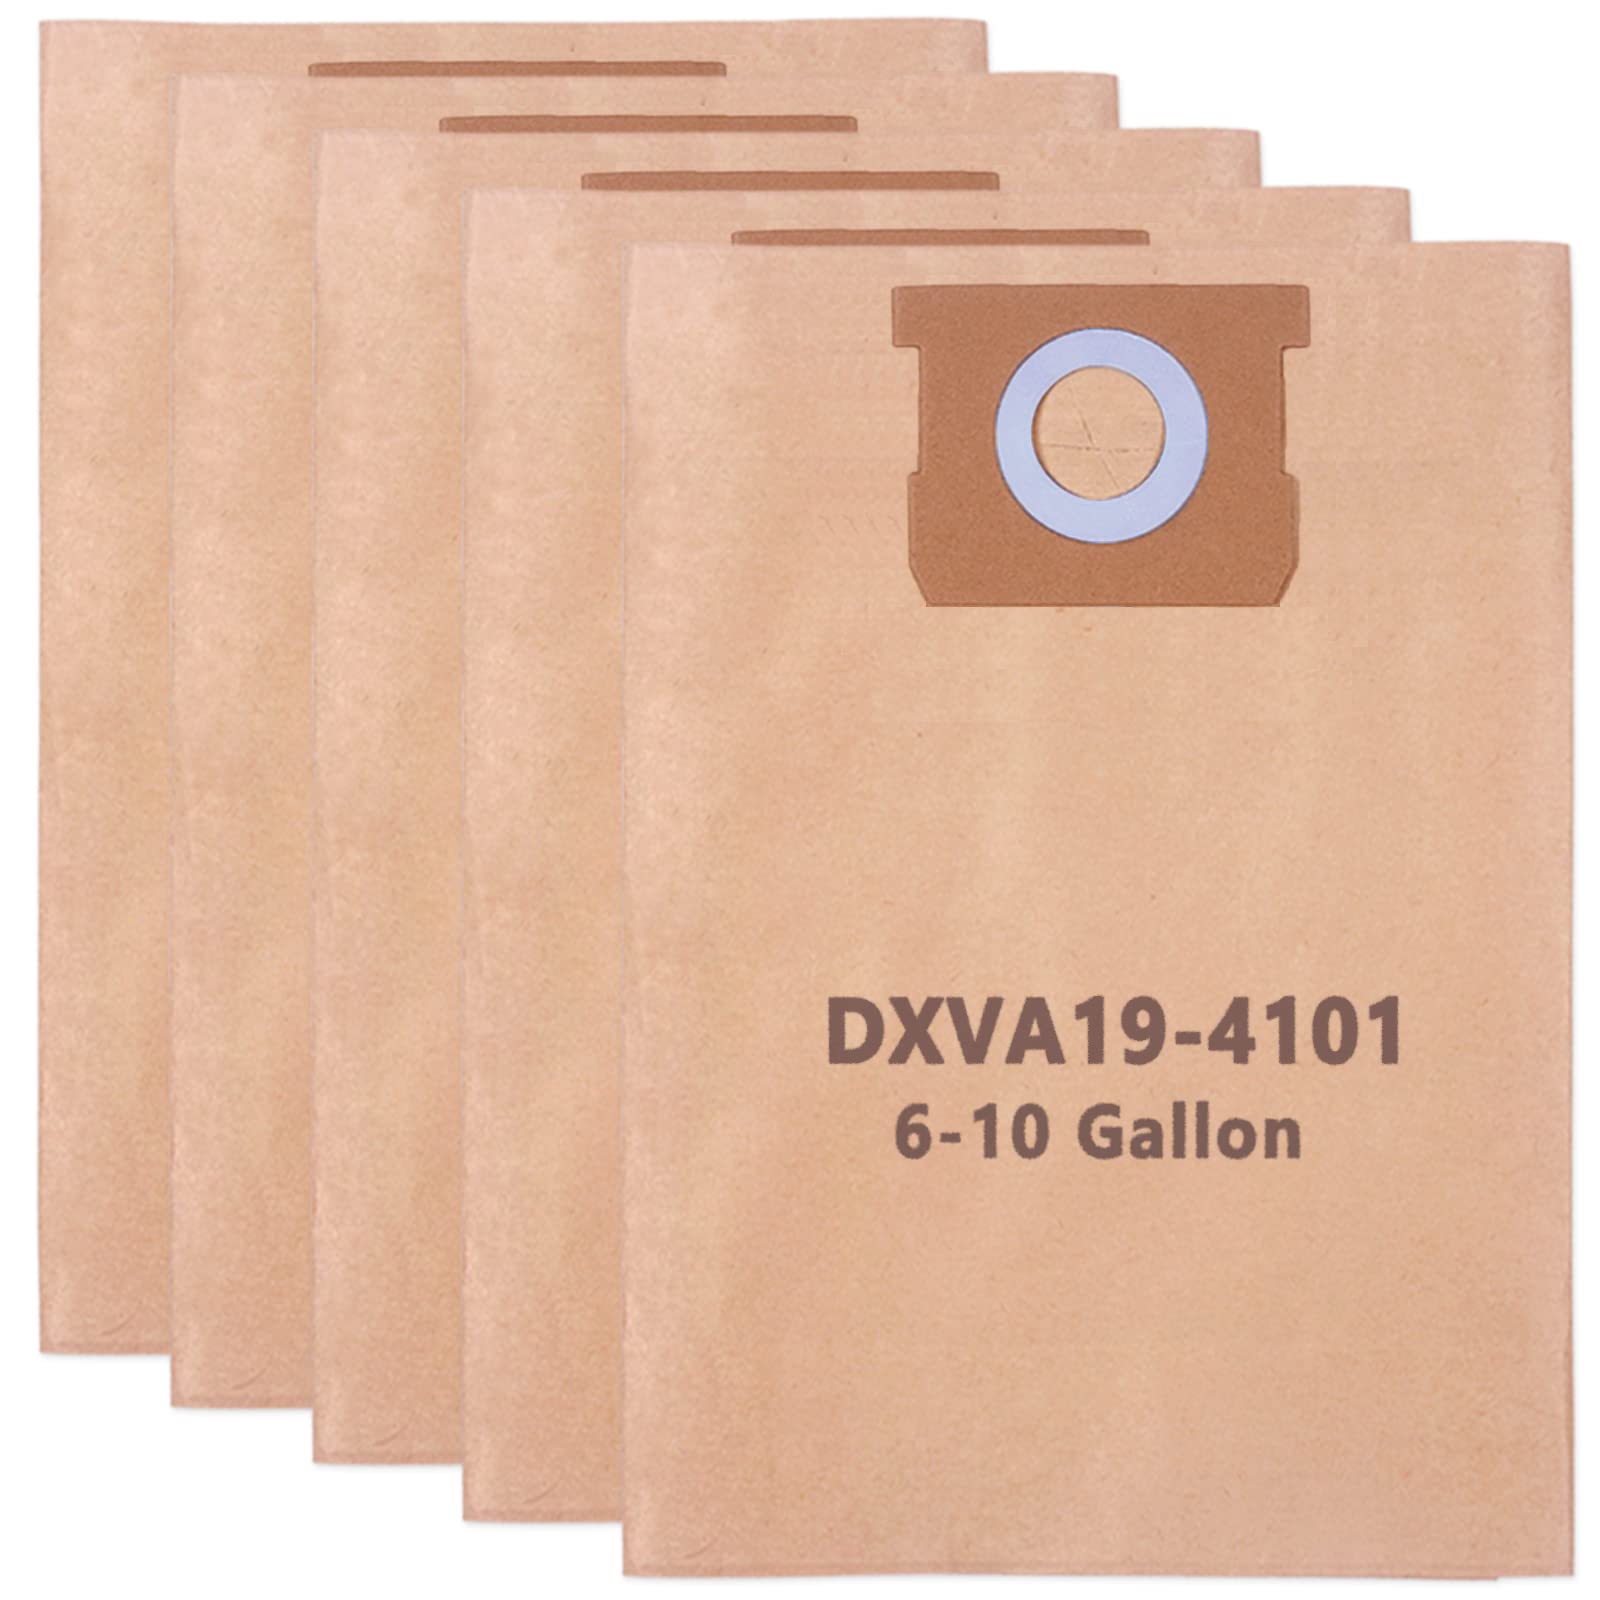 5 Pack DXVA19-4101 Replacement Filter Bags for DEWALT 6-10 Gallon Wet/Dry Vacuum Models DXV06P, DXV09P, DXV10P, DXV10S